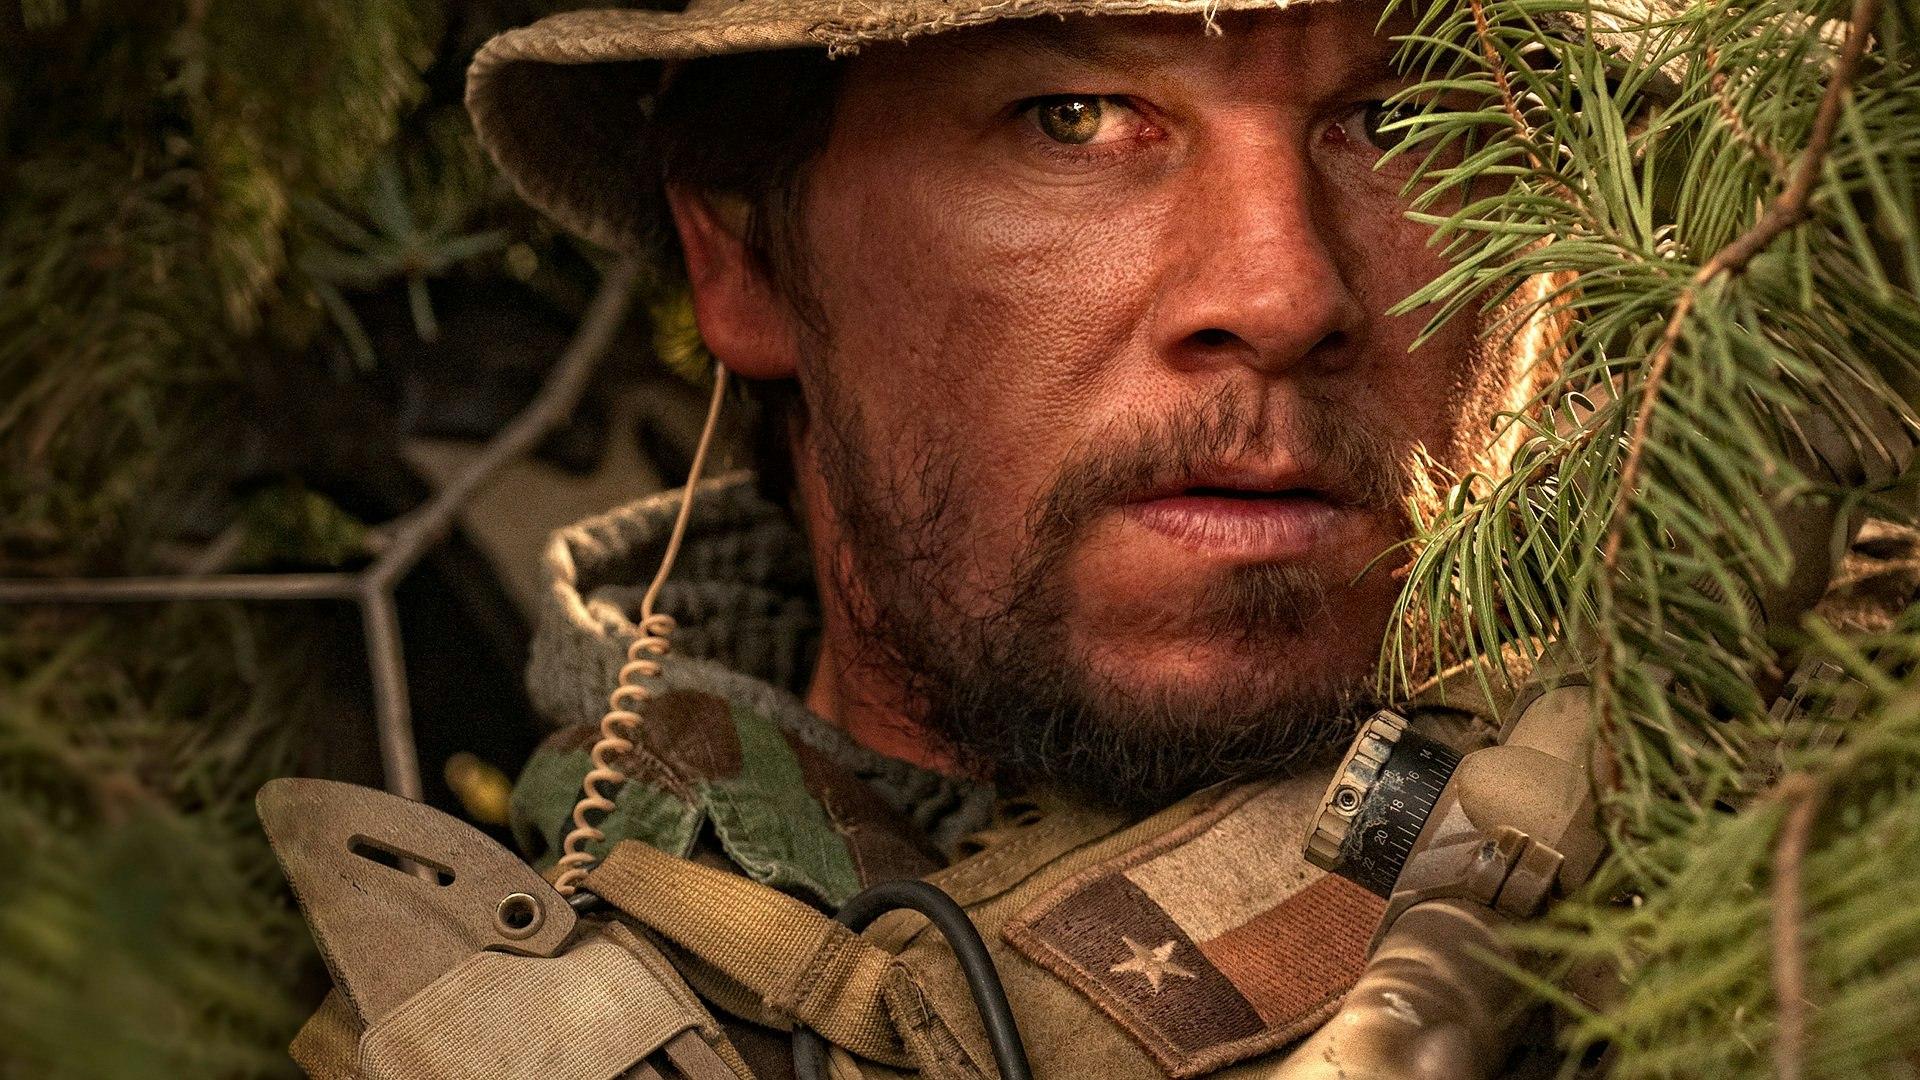 Who Survives “Lone Survivor,” Wahlberg or Kitsch?